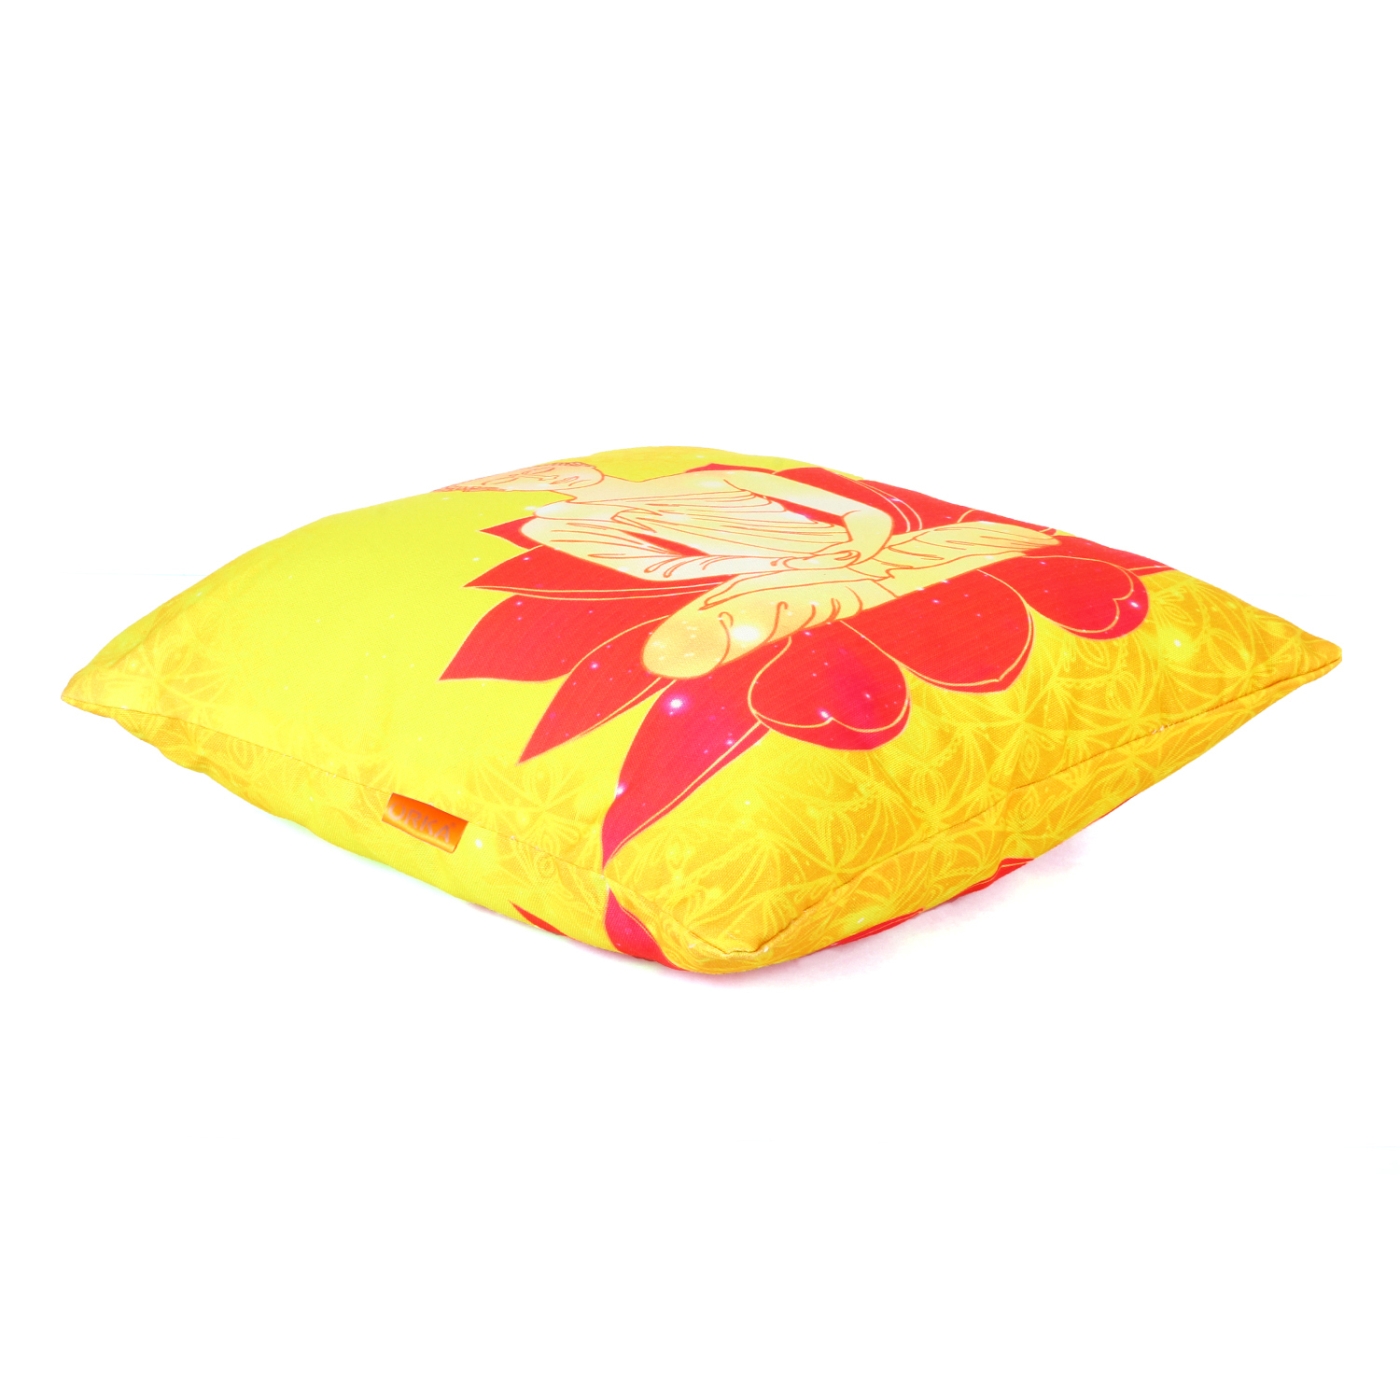 ORKA Gautam Buddha Digital Printed Canvas Filled With Polyfill Square Cushion 14 X 14 Inch (Yellow, Red)  